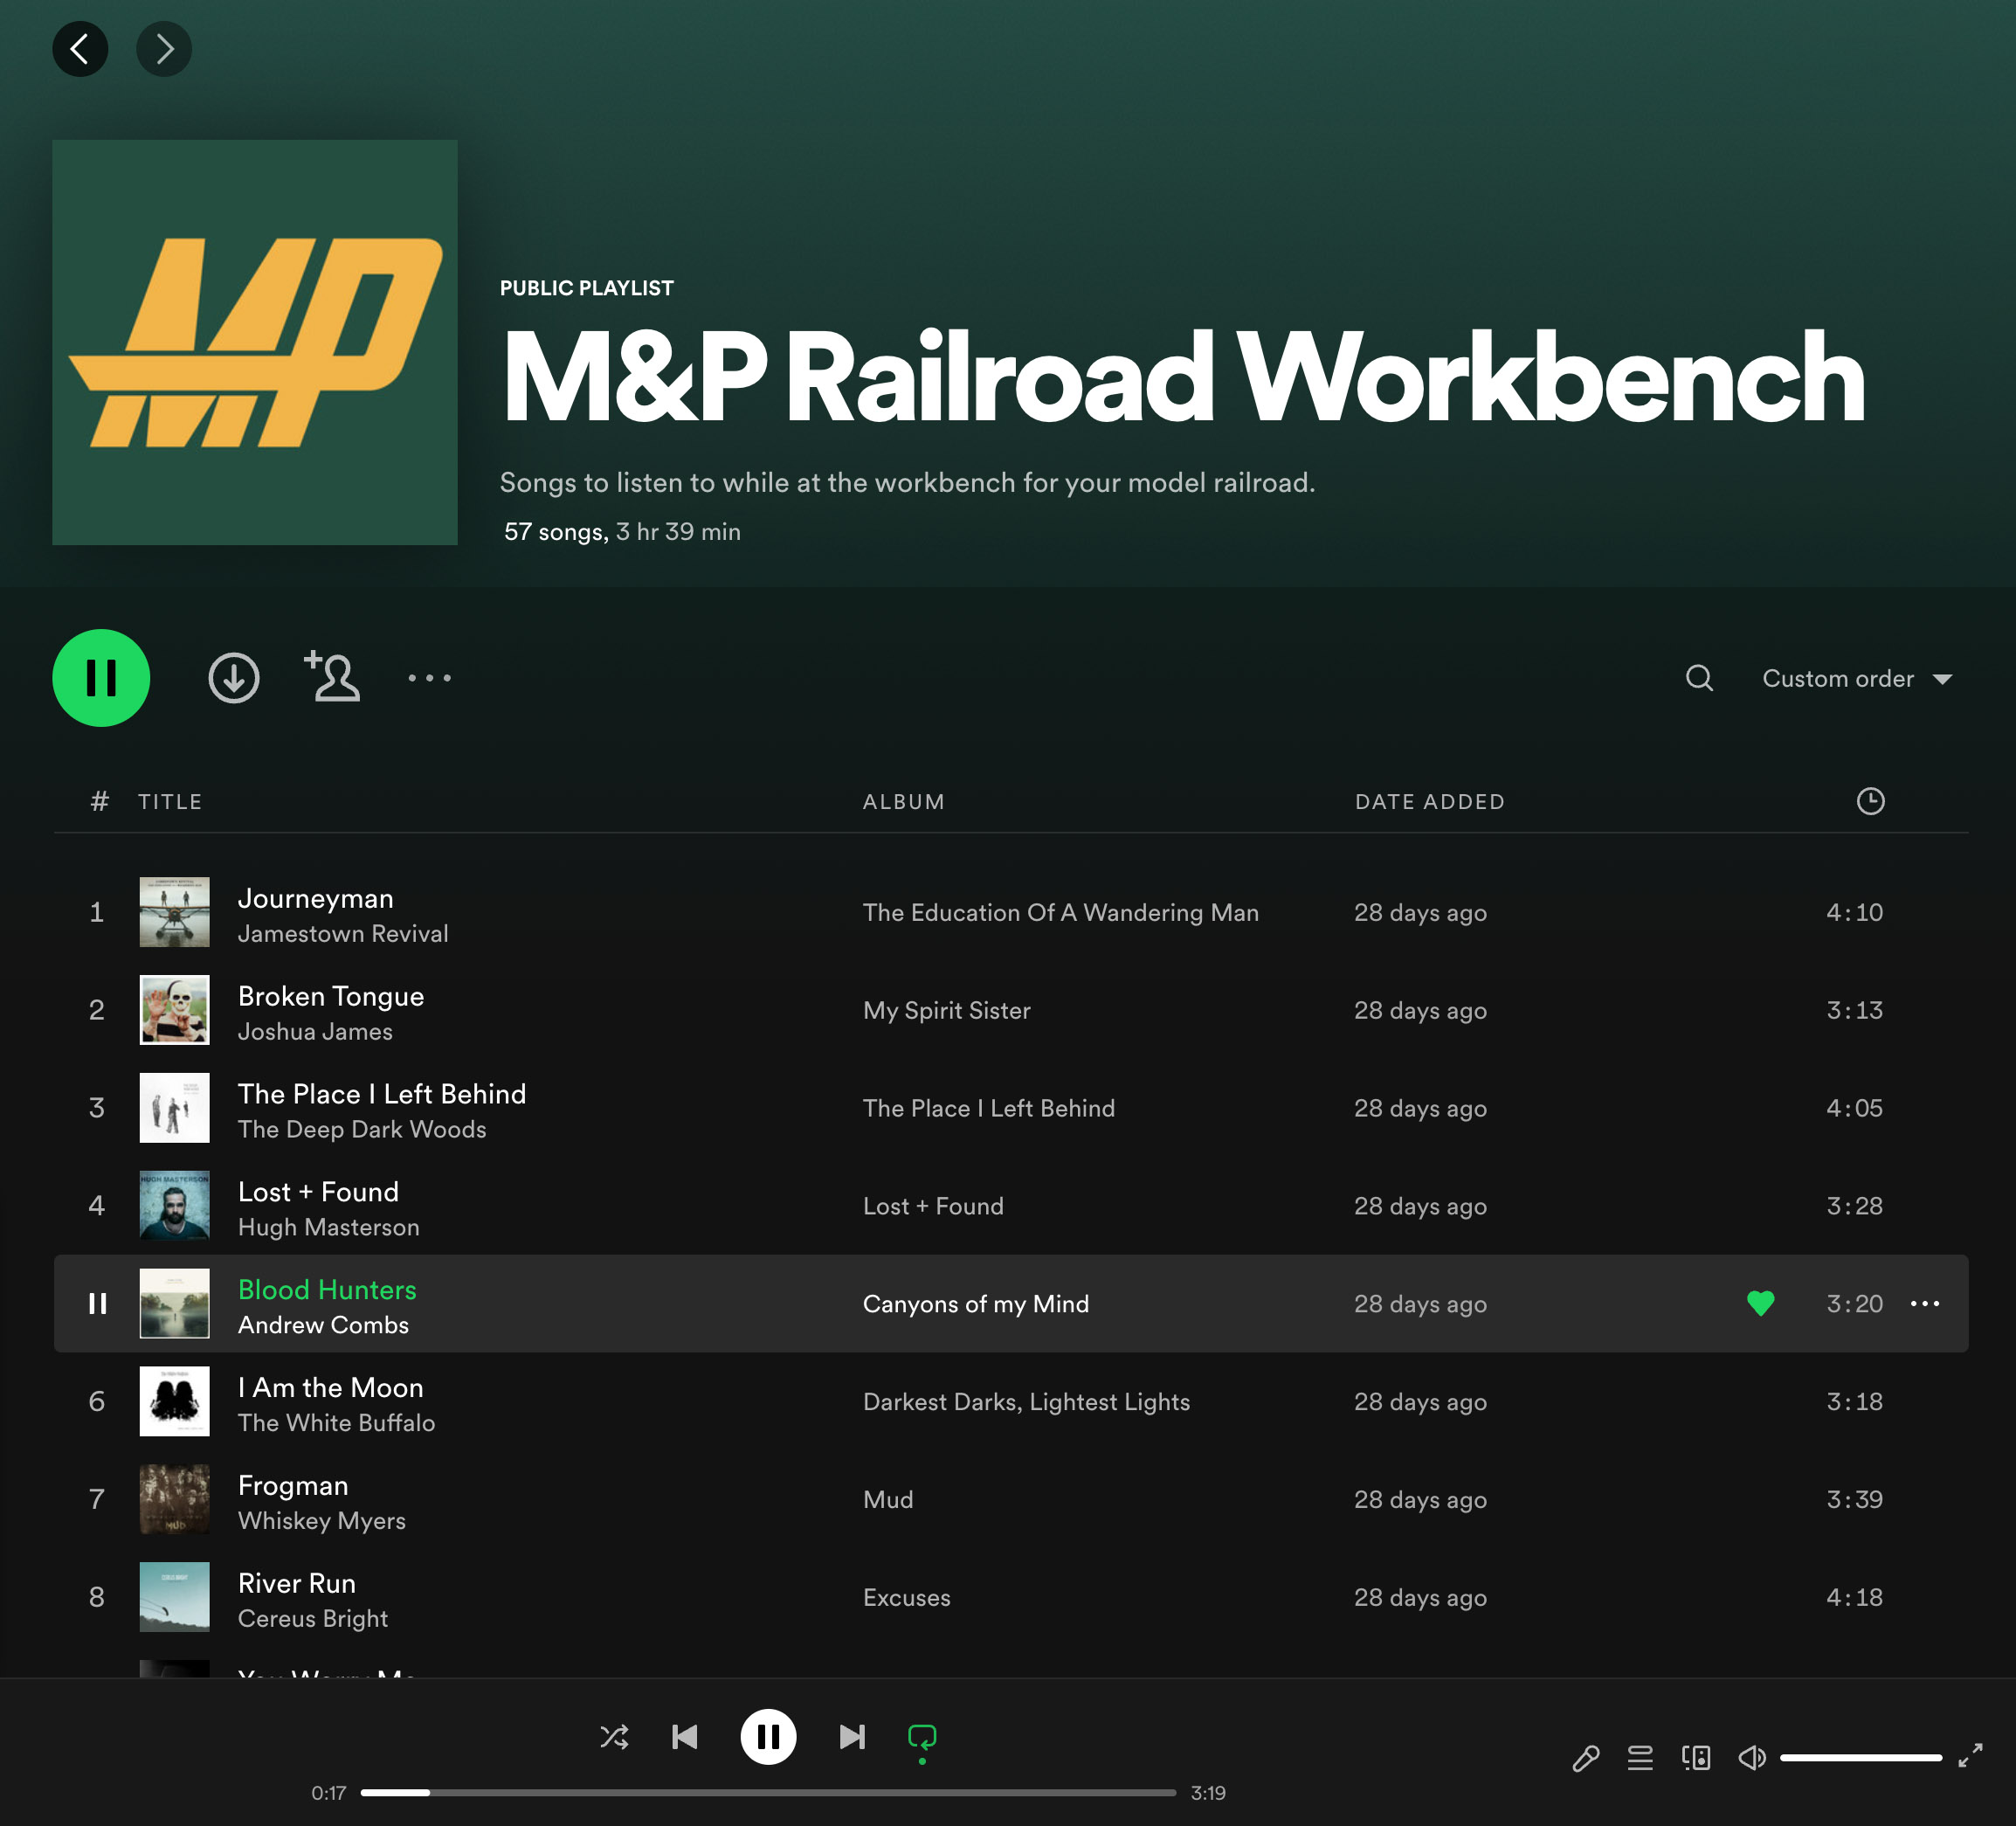 M&P Railroad Workbench Playlist